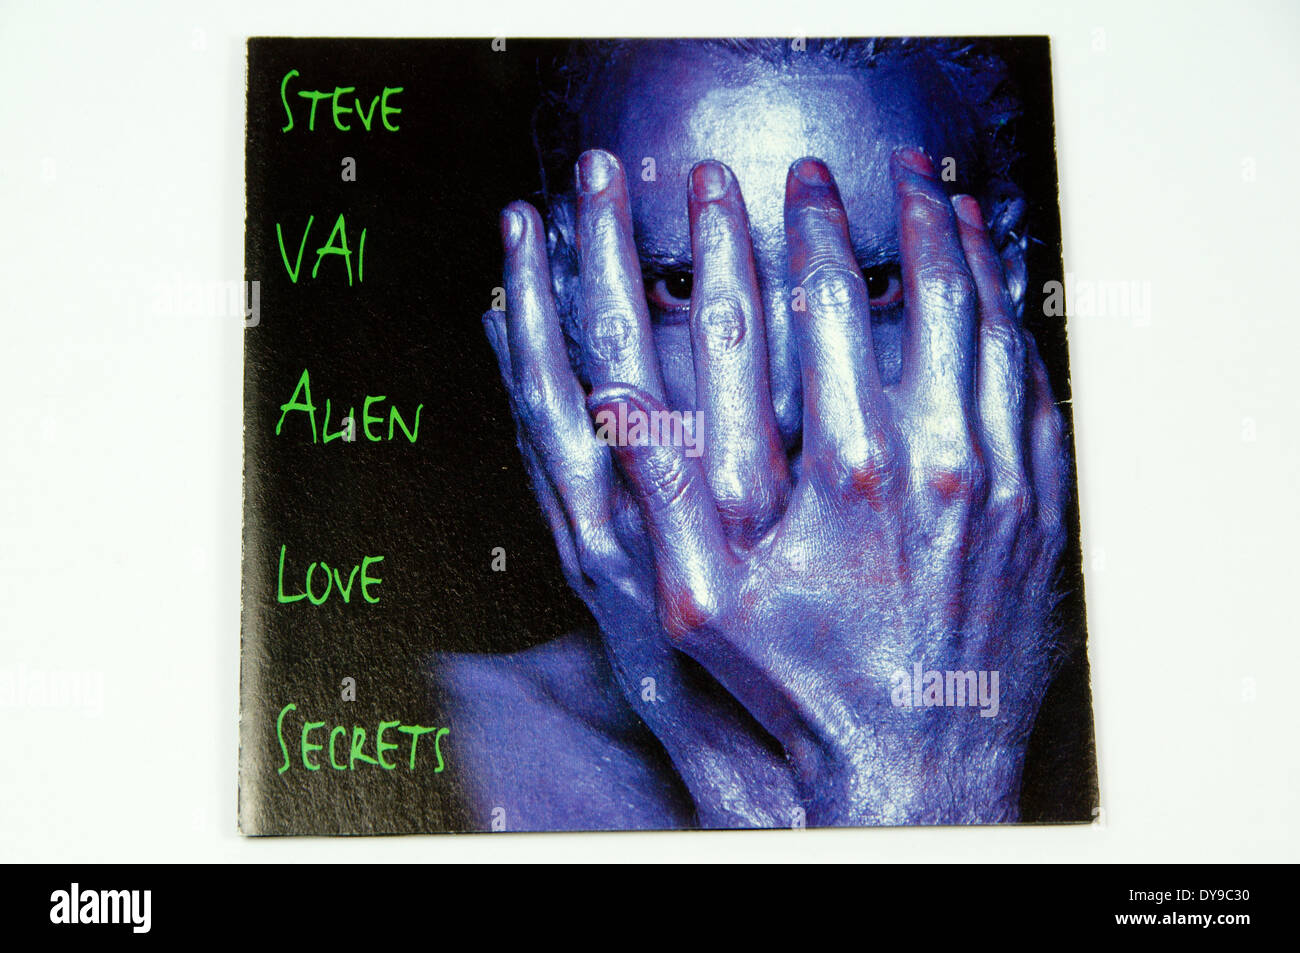 Steve Vai "Alien Love Secrets" album Stockfoto